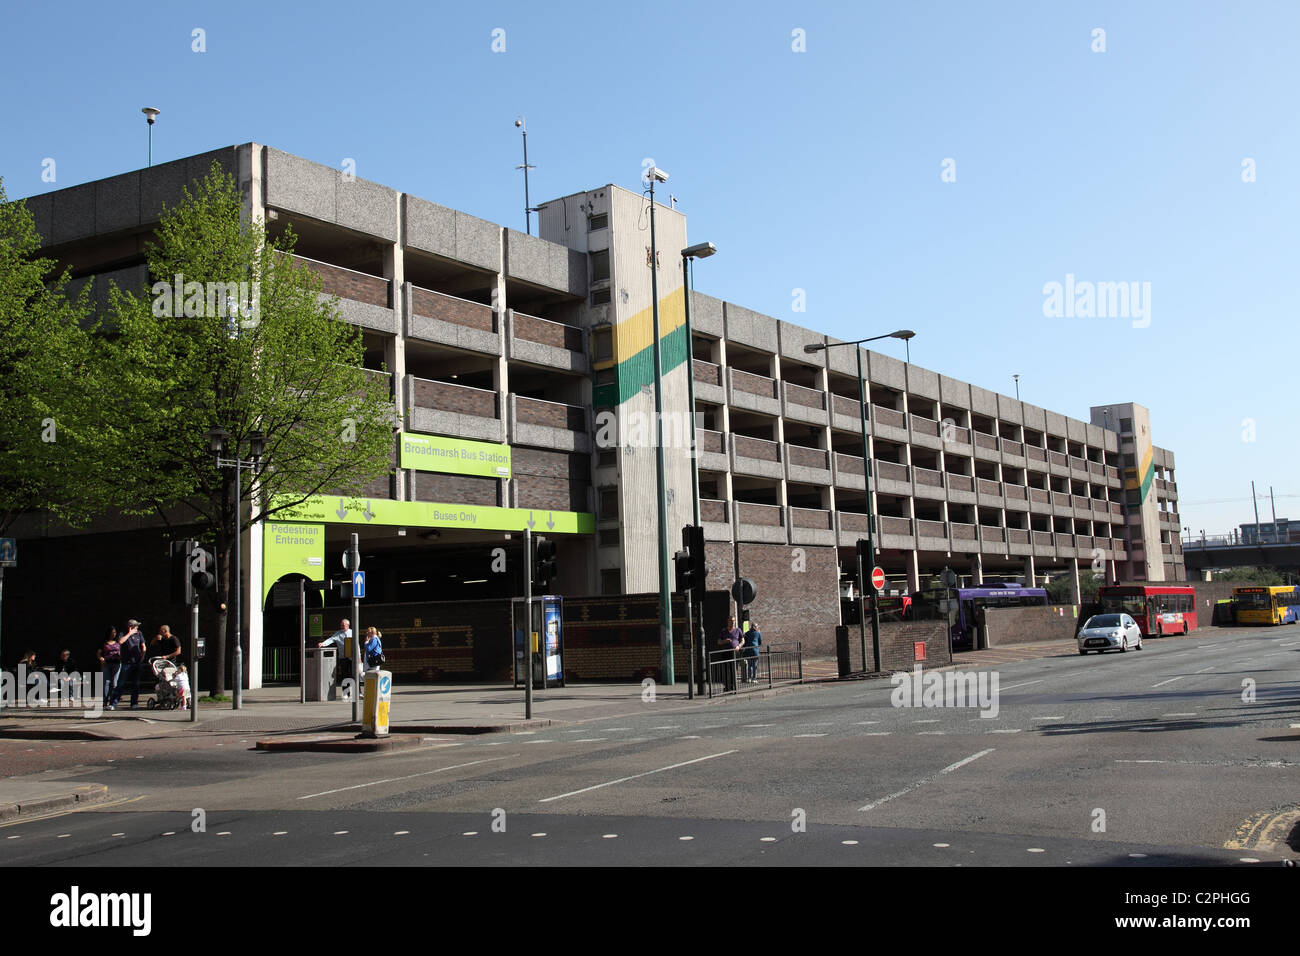 The Broadmarsh bus station and muti-storey car park in Nottingham, England, U.K. Stock Photo